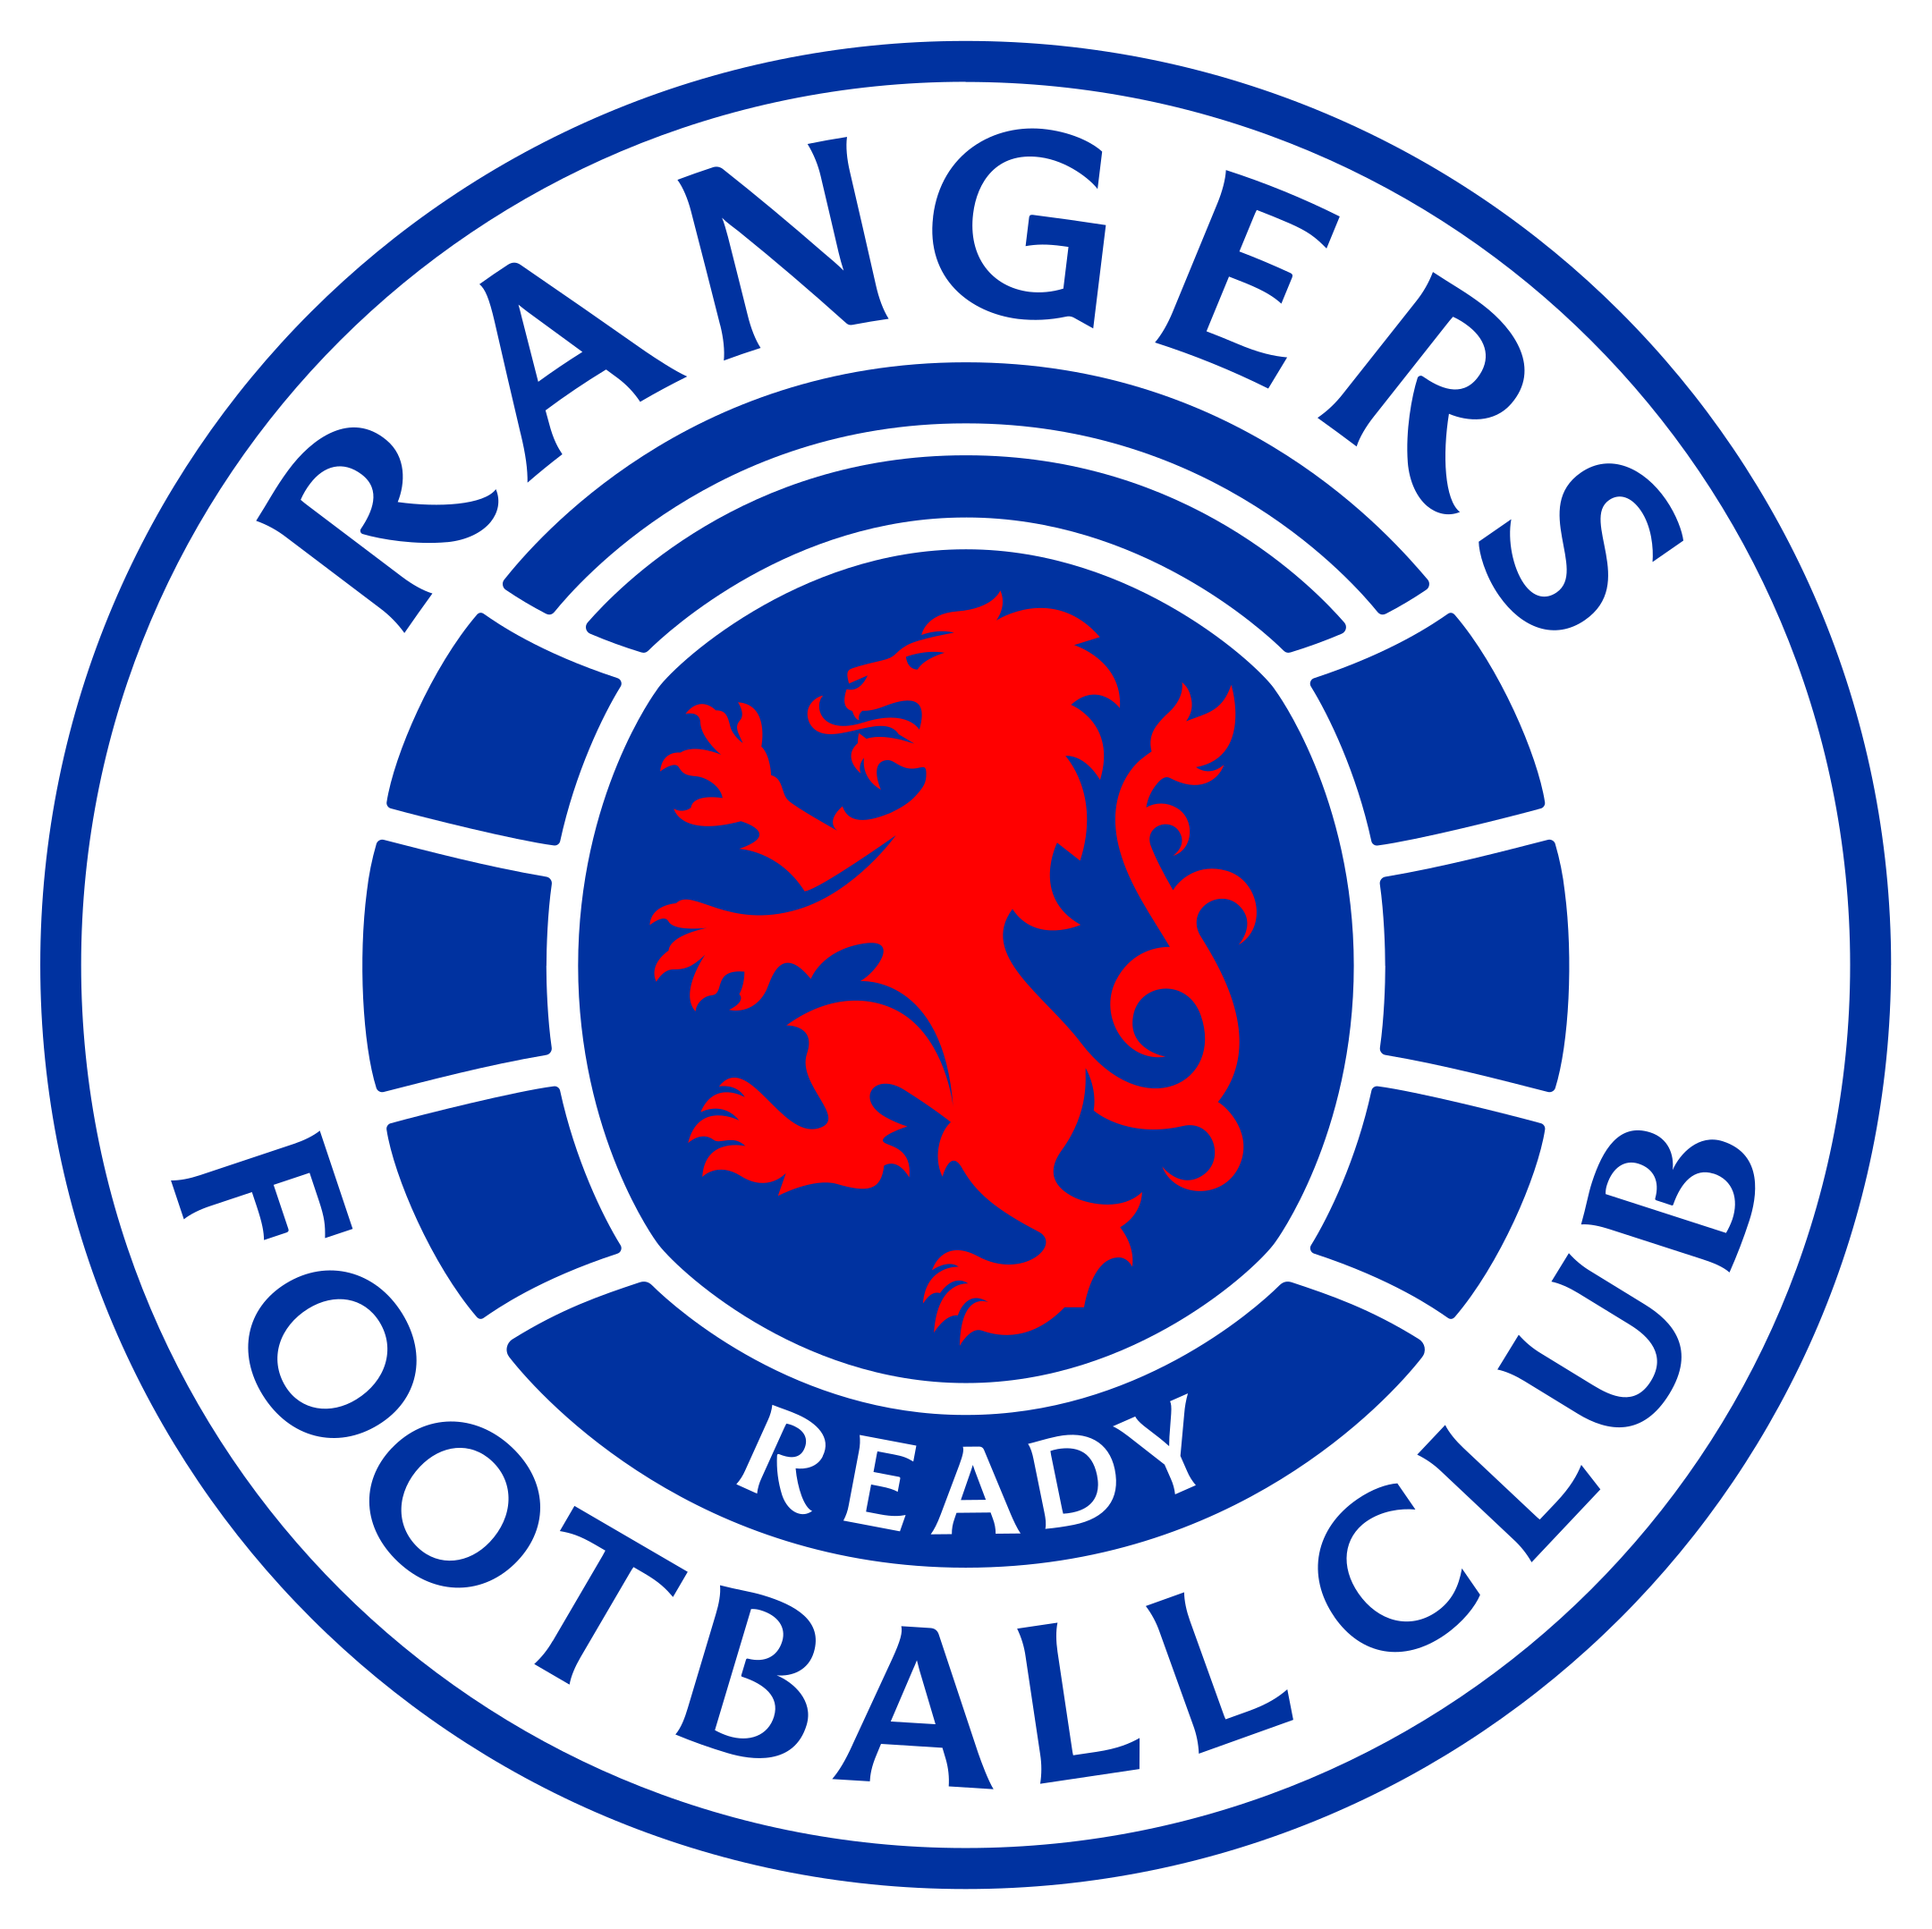 rangers fc logo 1 - Rangers FC Logo